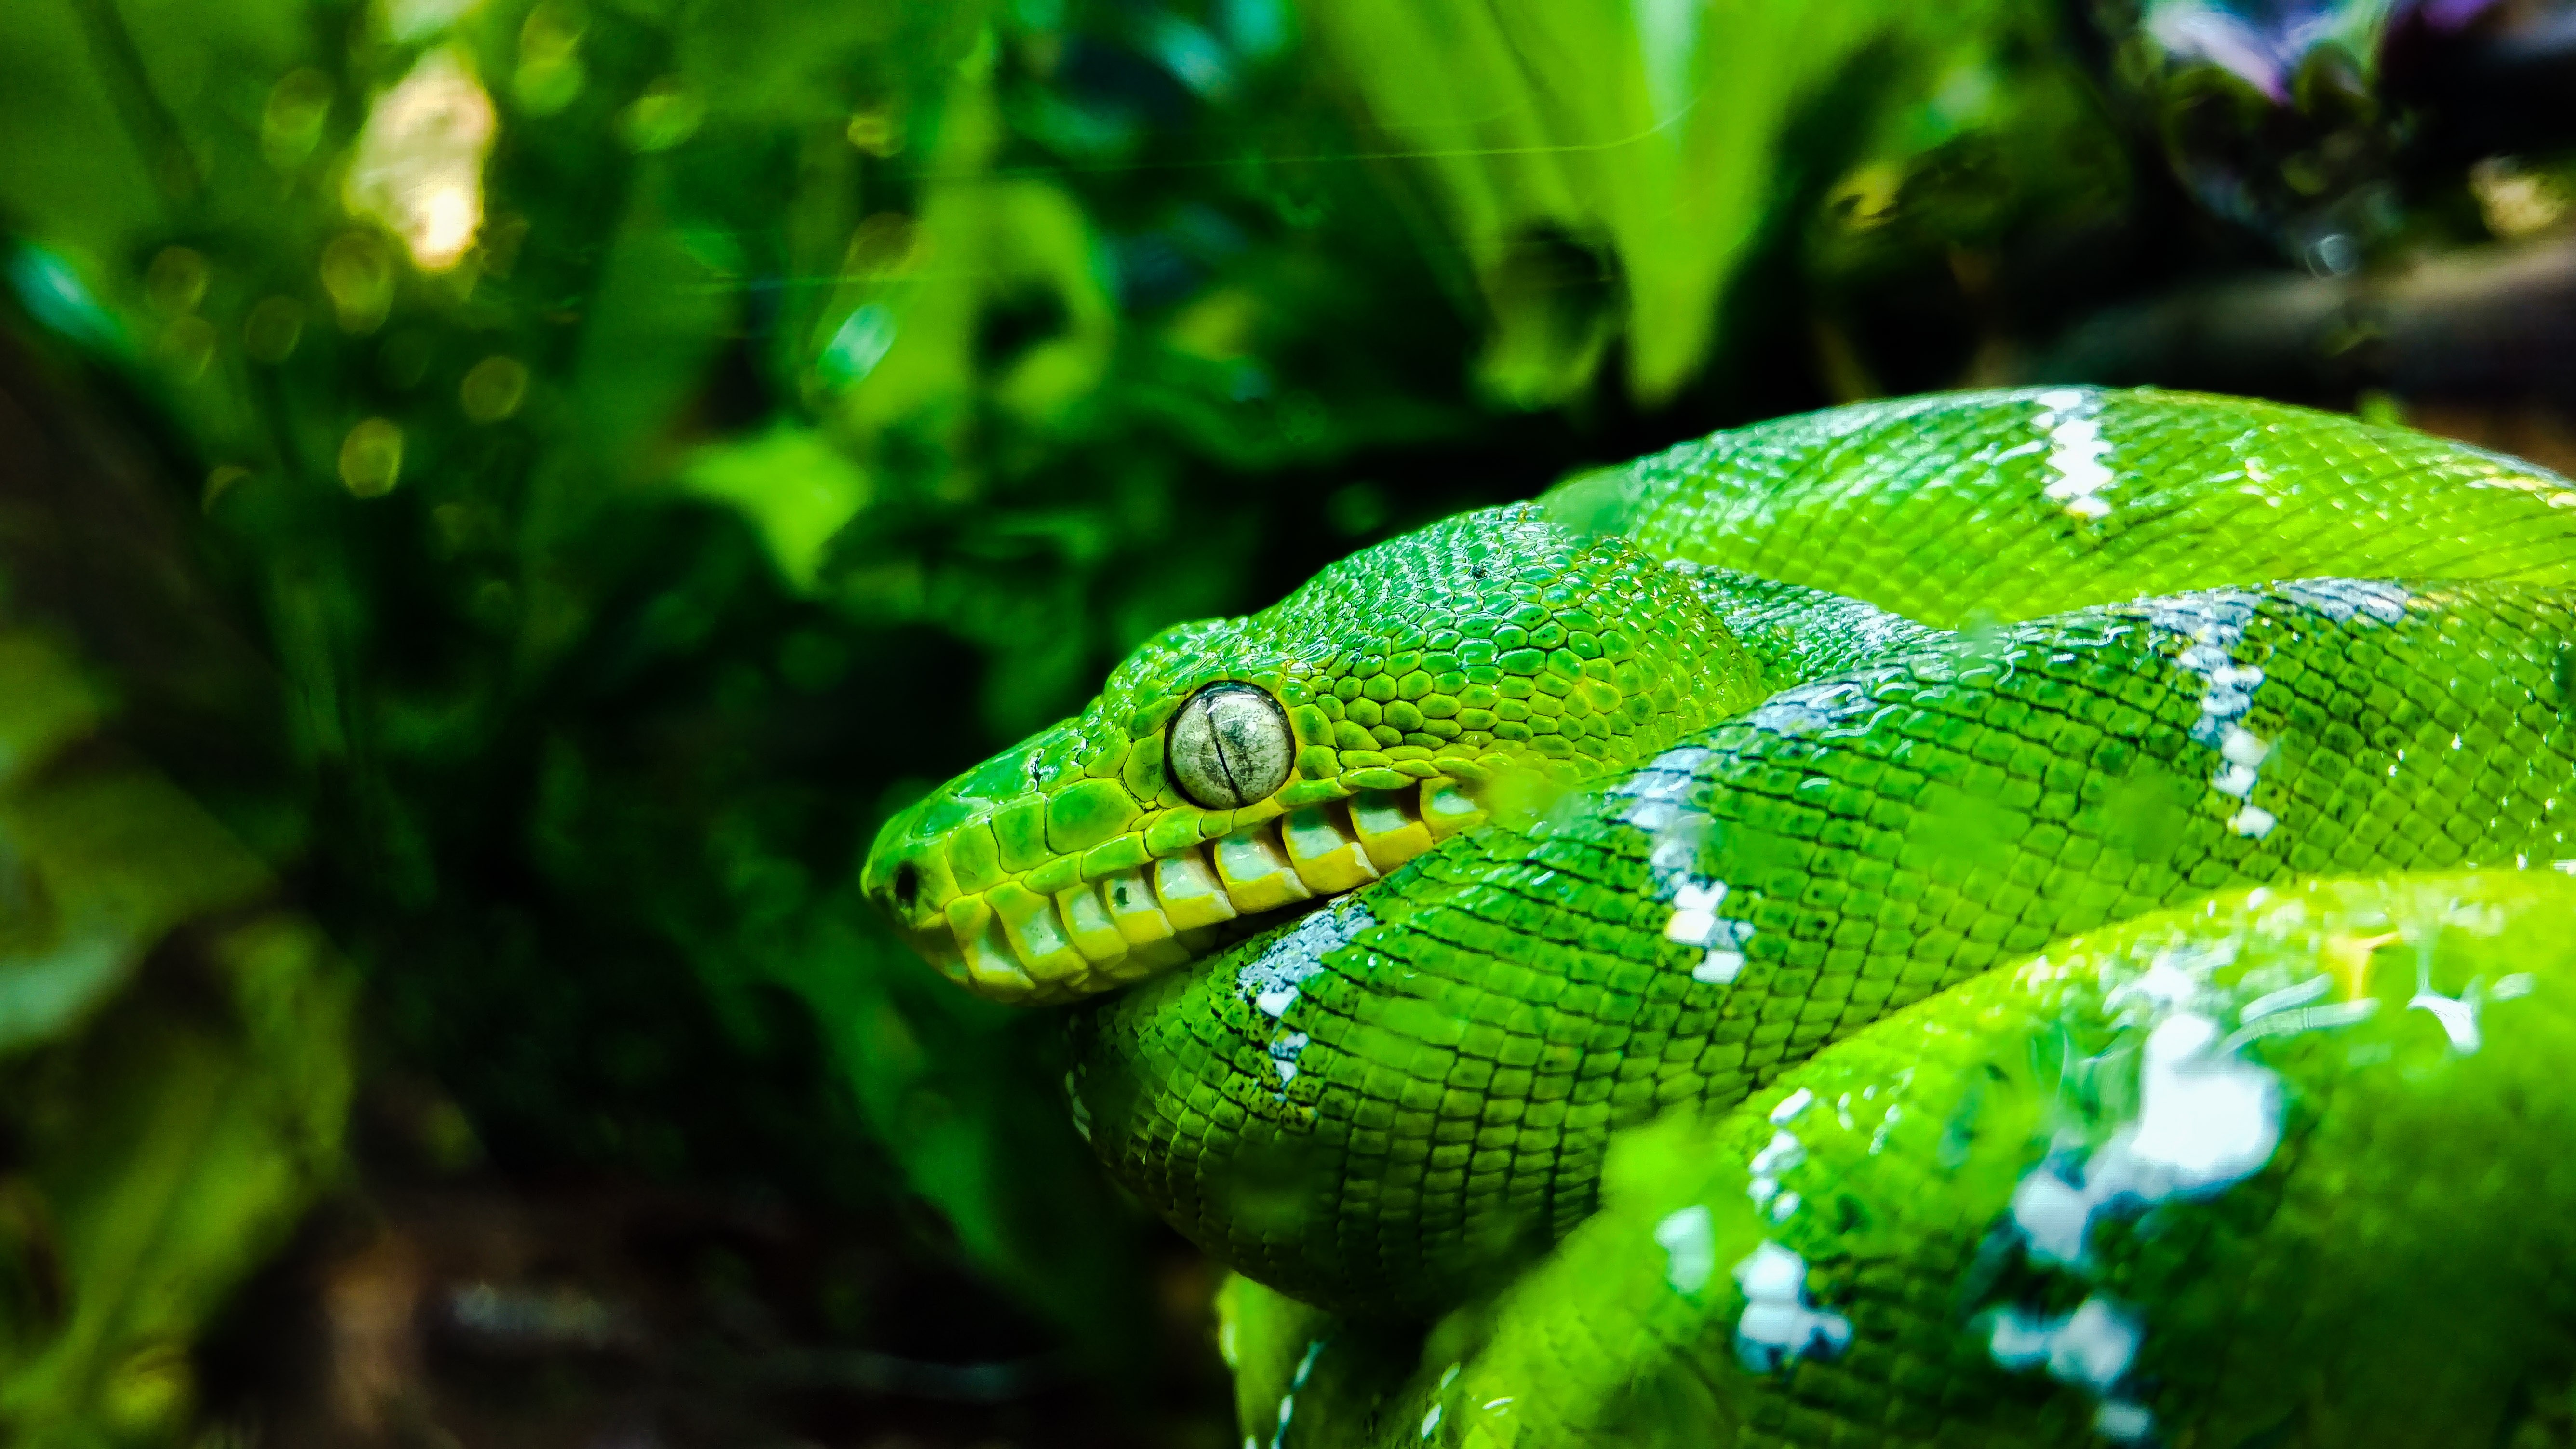 General 5344x3006 green animals San Francisco closeup blurry background snake